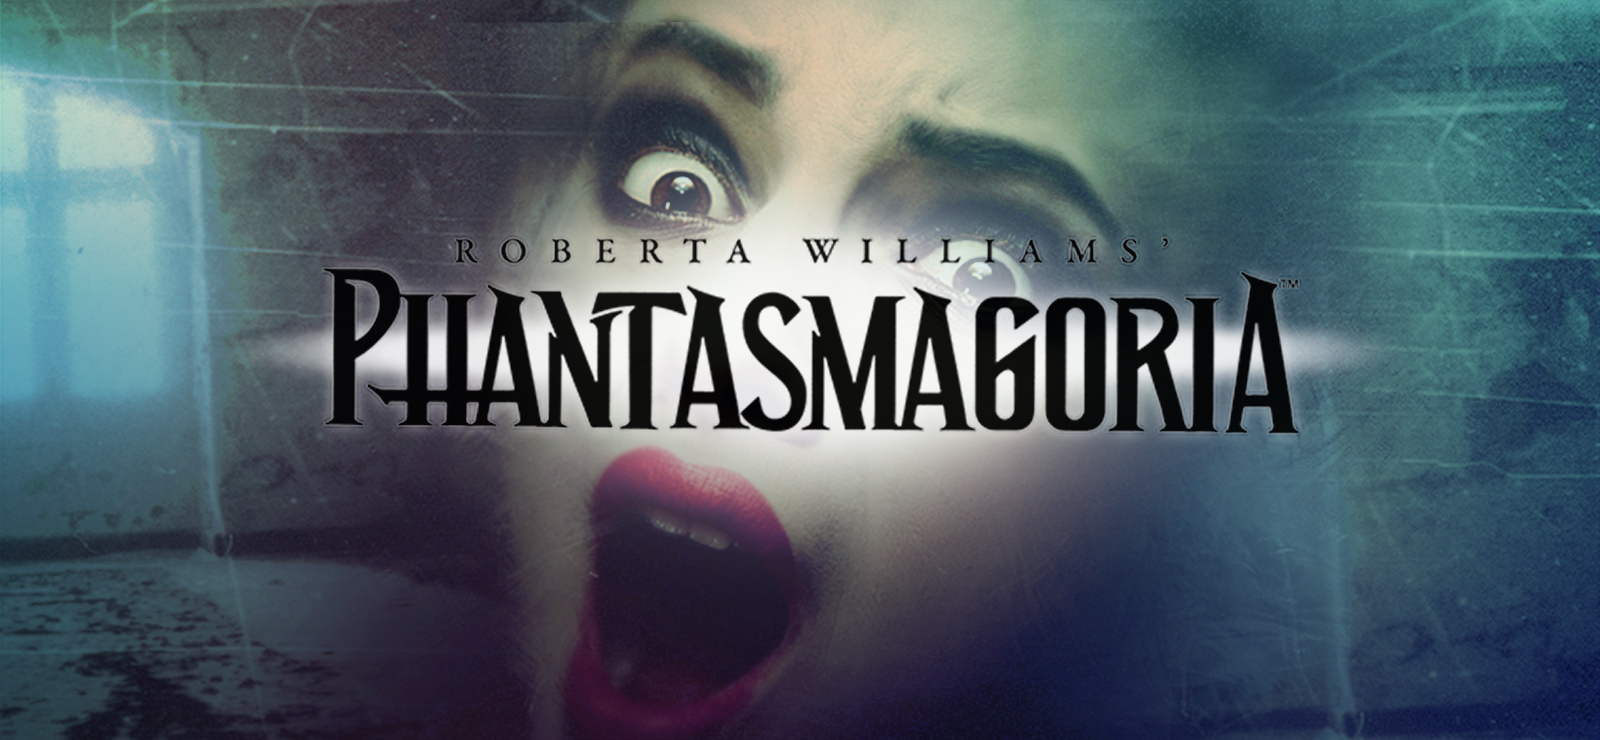 download phantasmagoria game